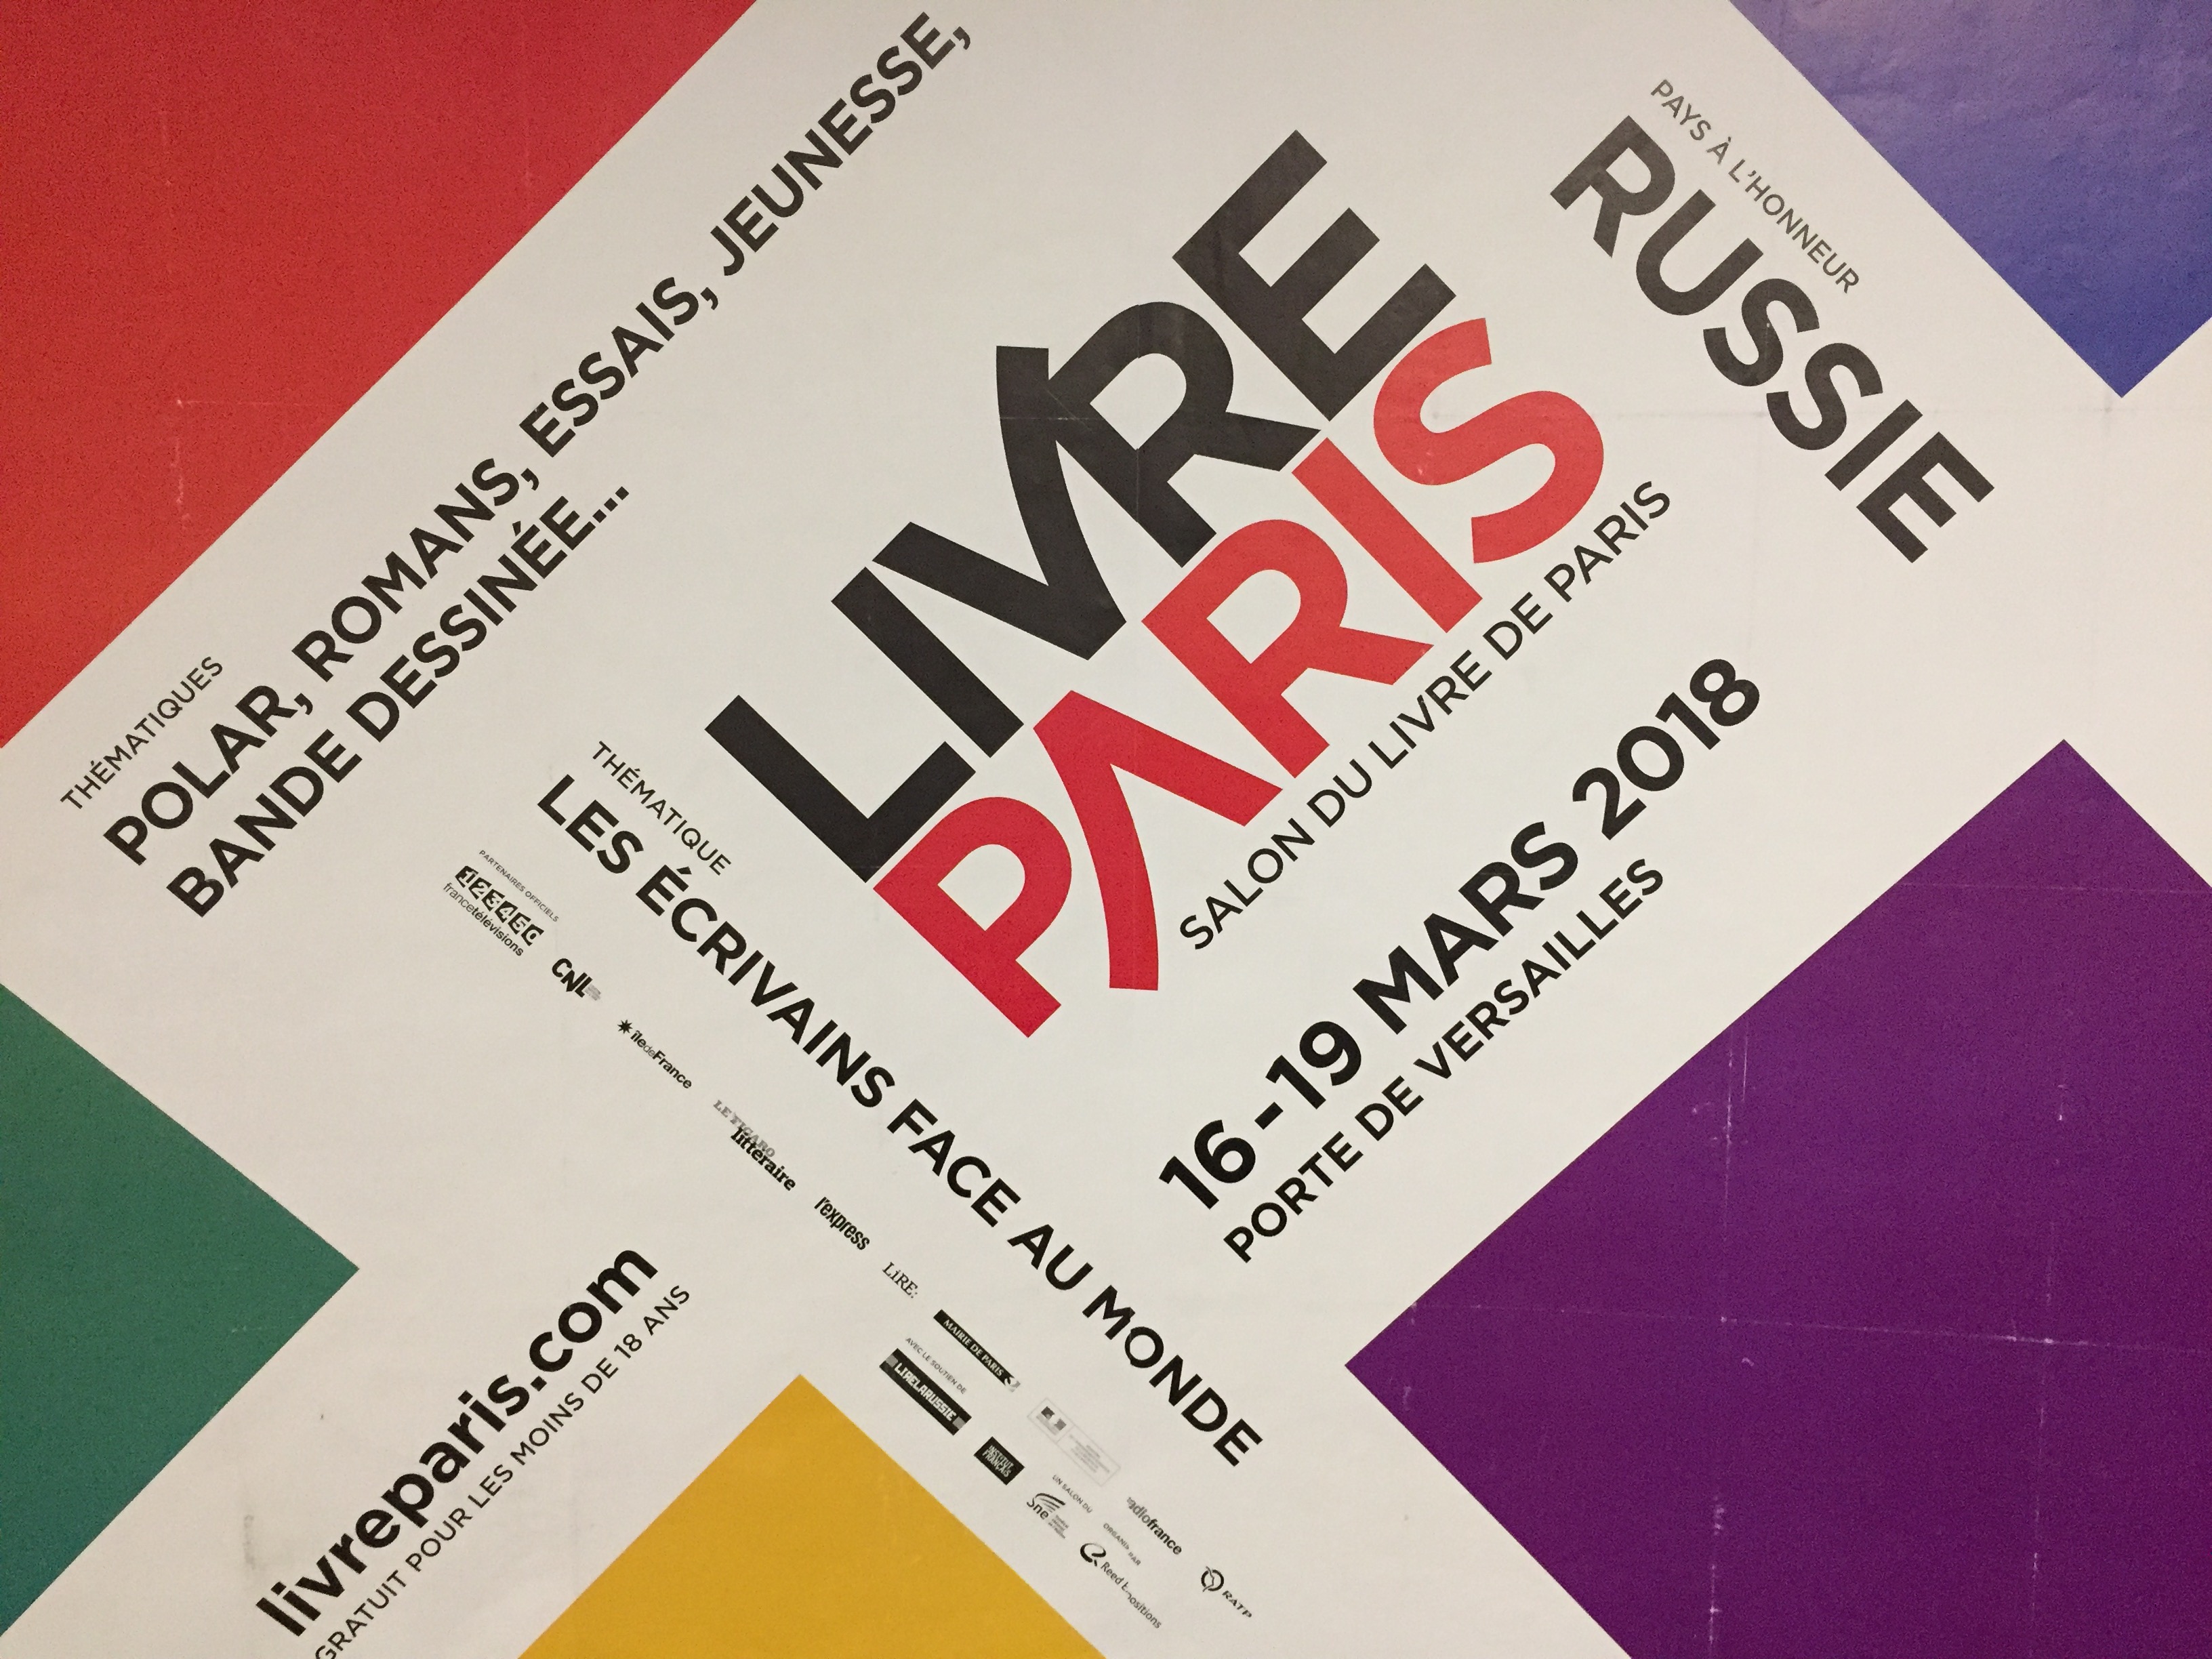 2 Seas Agency Attends the 2018 Livre Paris Book Fair